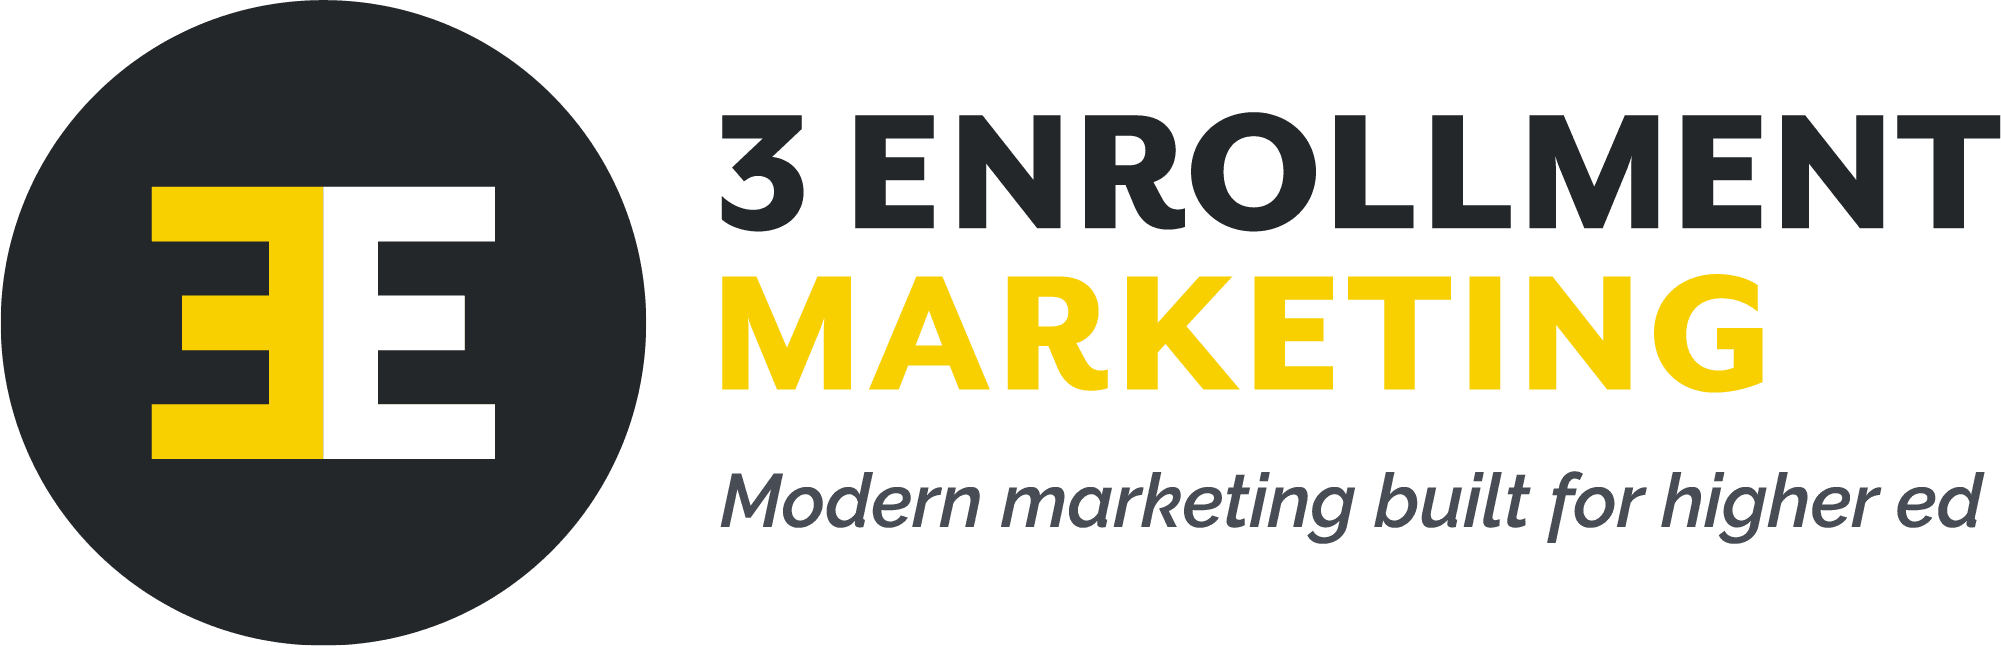 3 Enrollment Marketing, Inc.